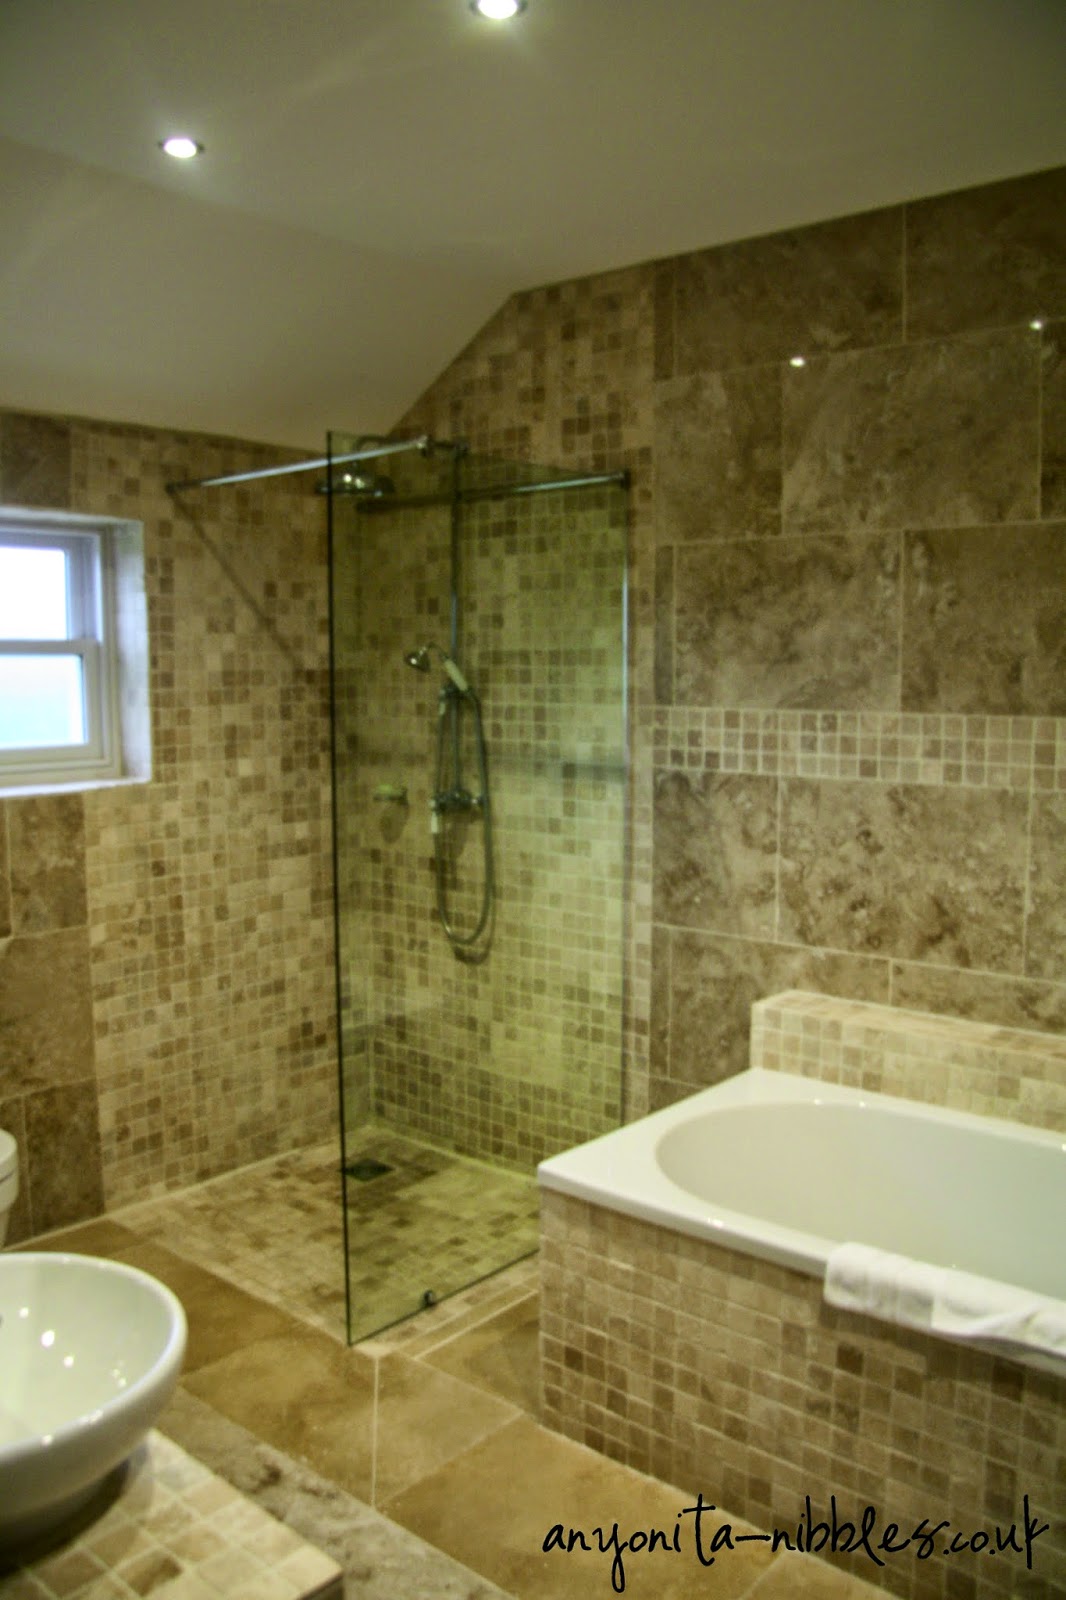 Helmsley 29's luxury bathroom at Ox Pasture Hall Hotel | Anyonita-nibbles.co.uk